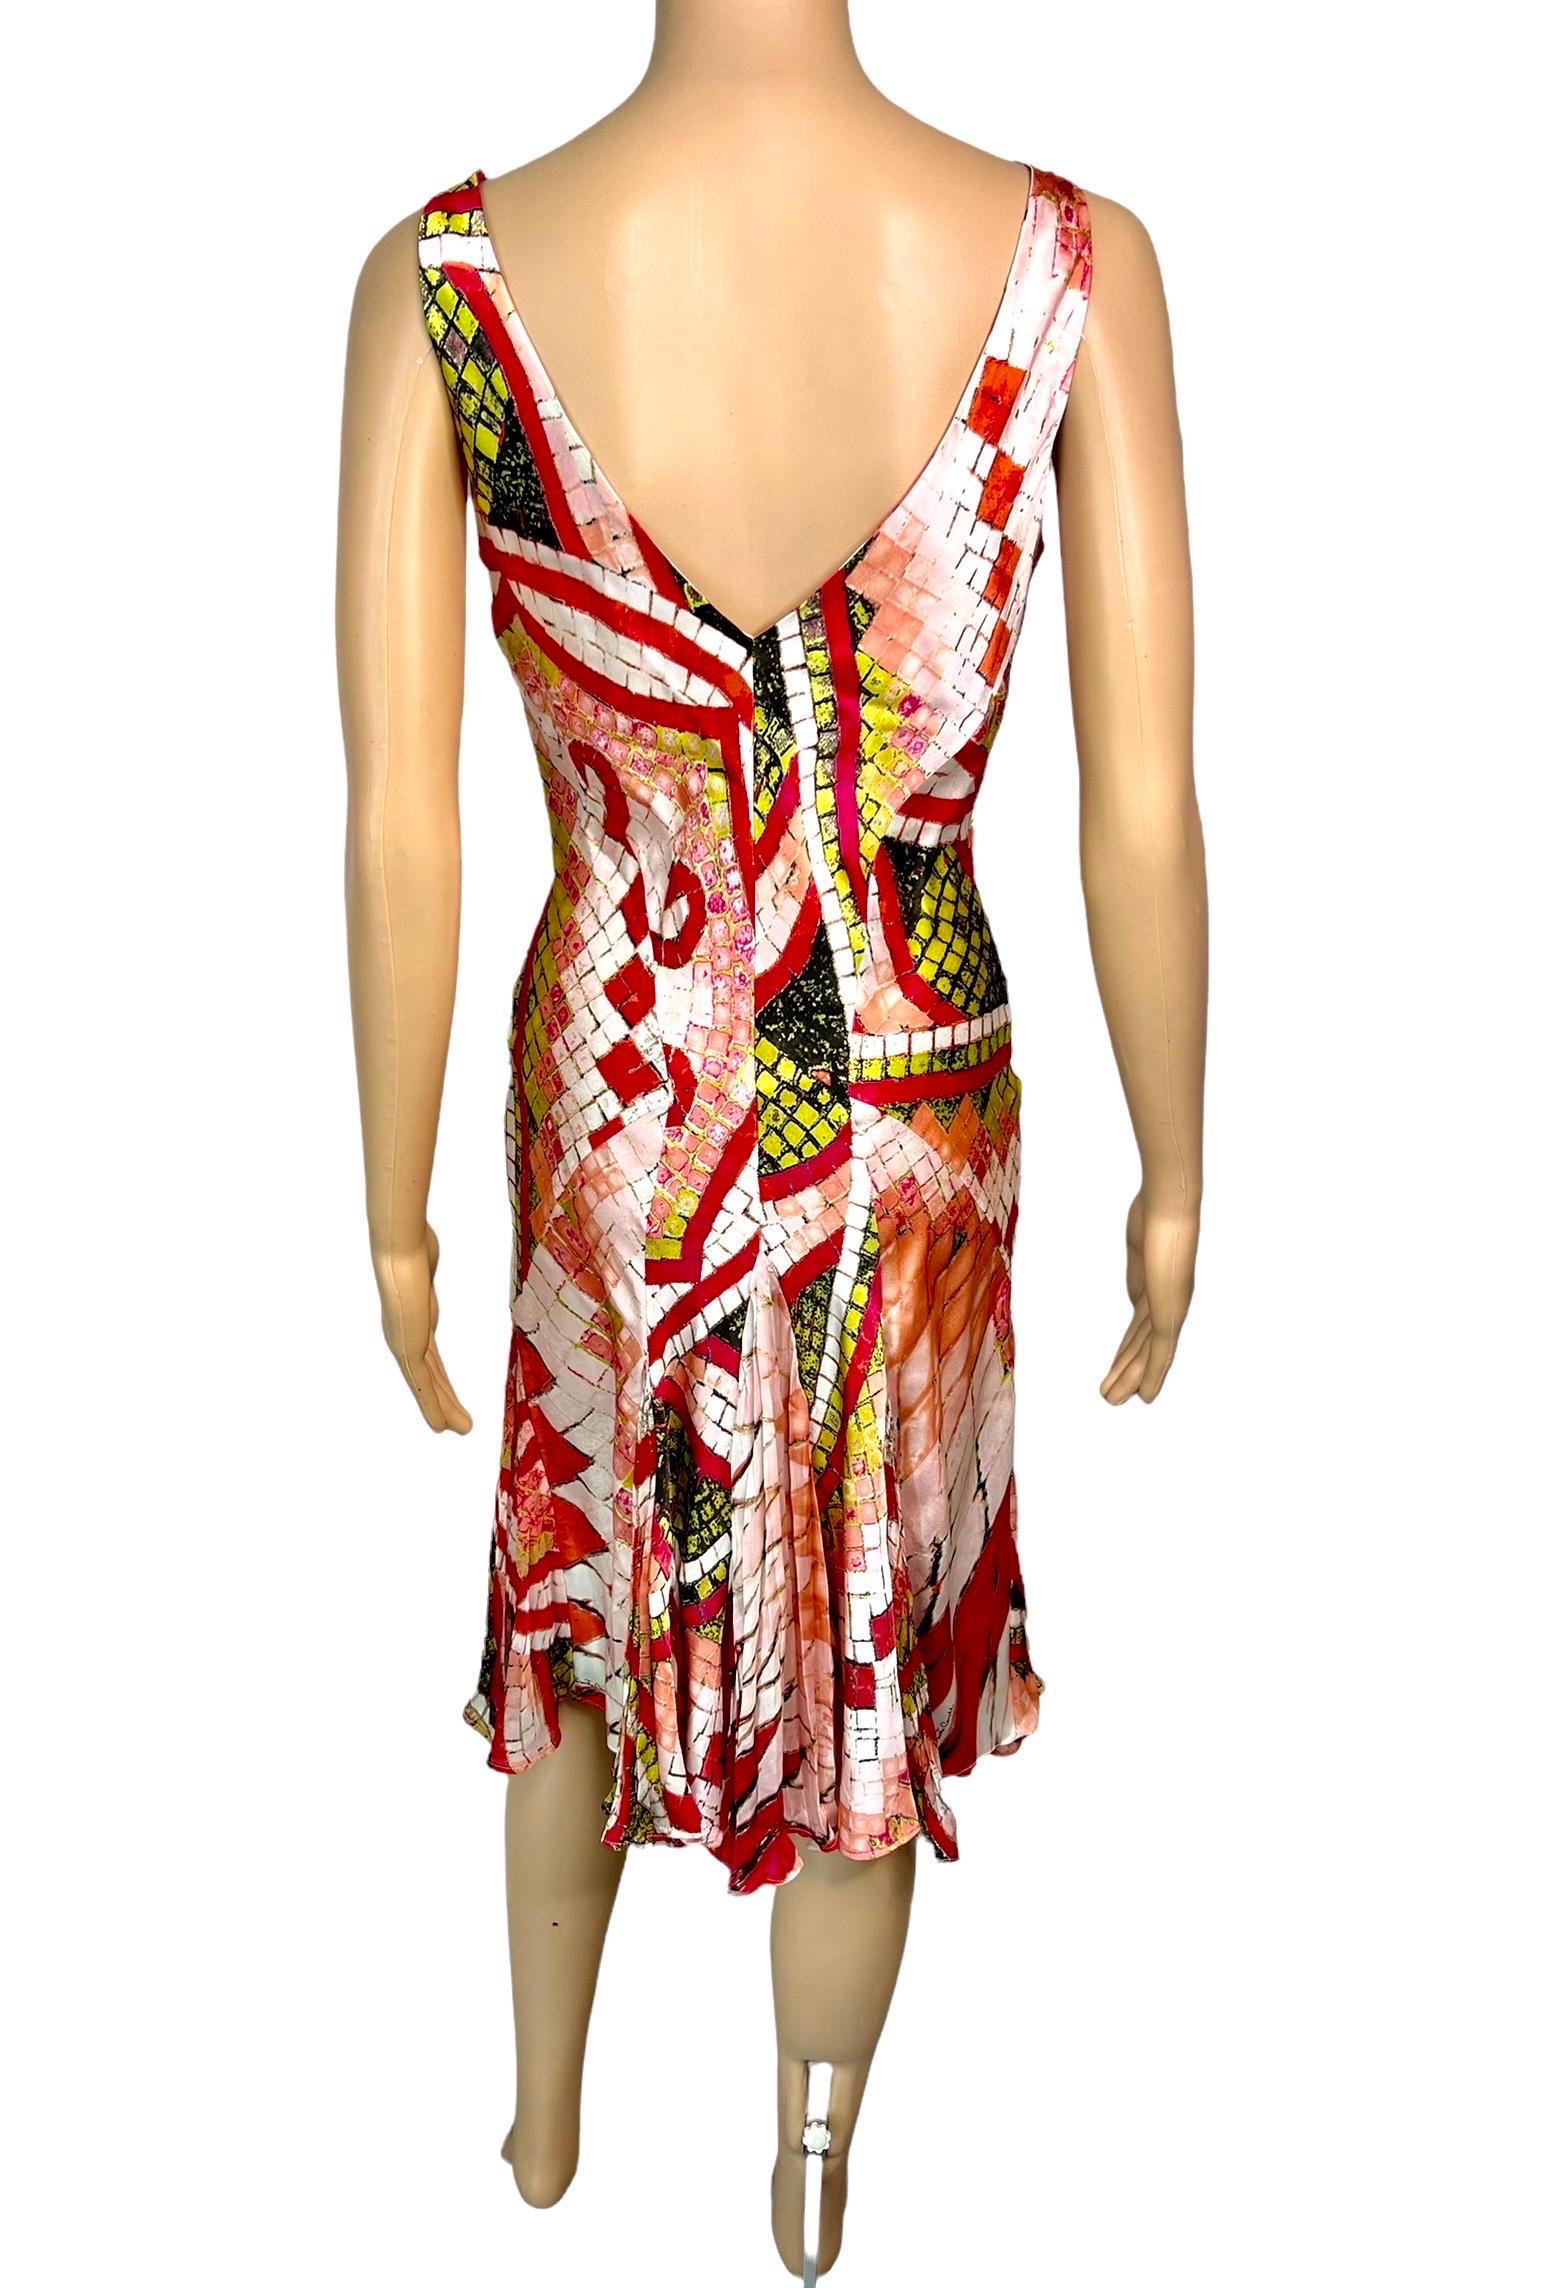 Women's Roberto Cavalli S/S 2004 Plunging Neckline Silk Dress For Sale